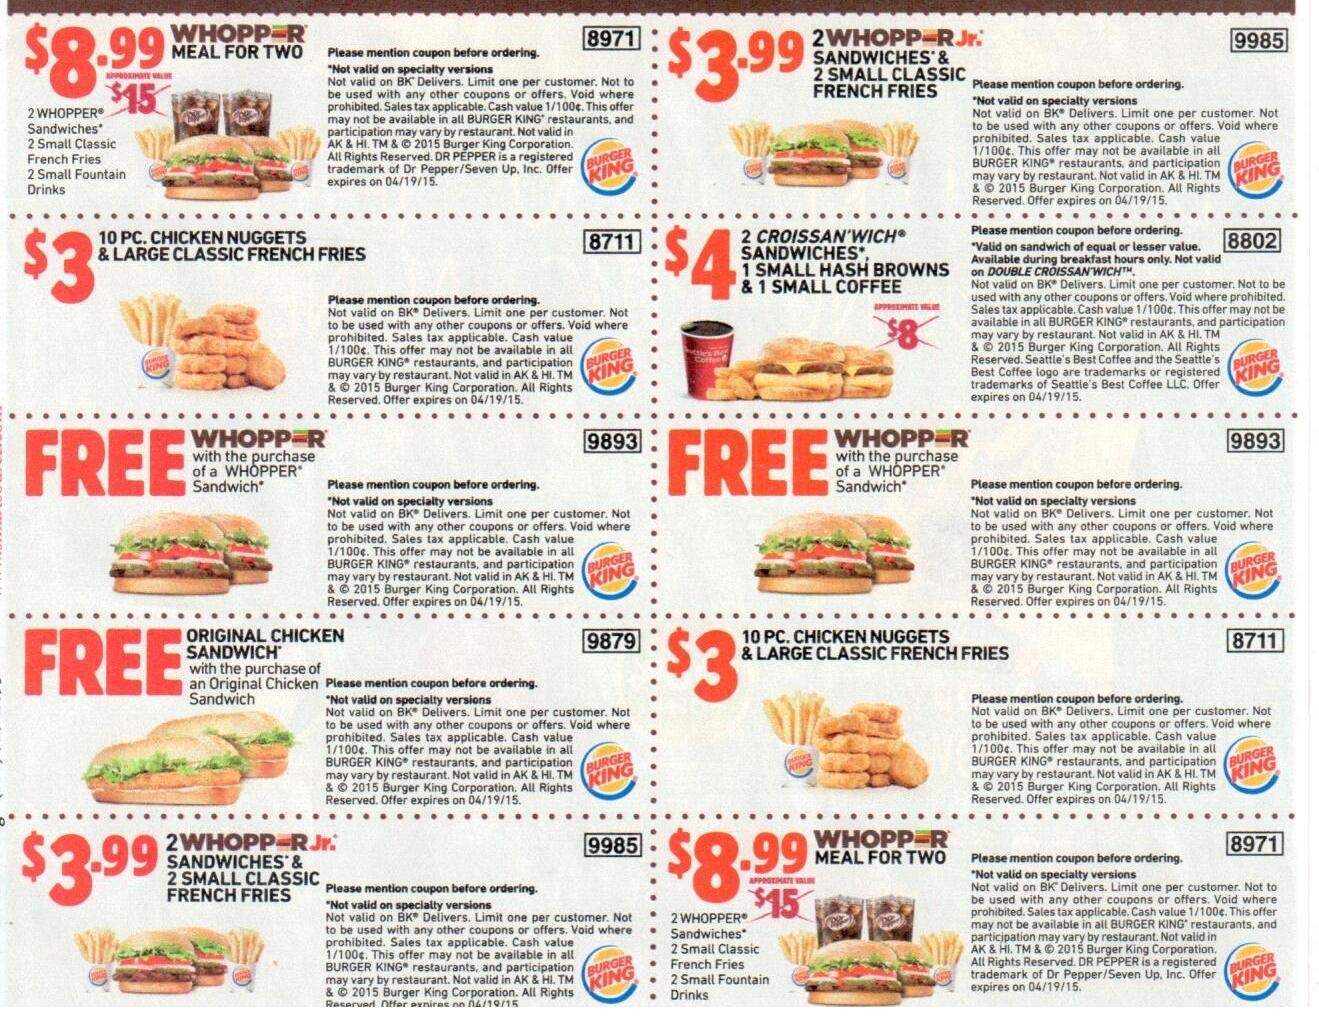 Burger King Free Coupons Printable Free Printable